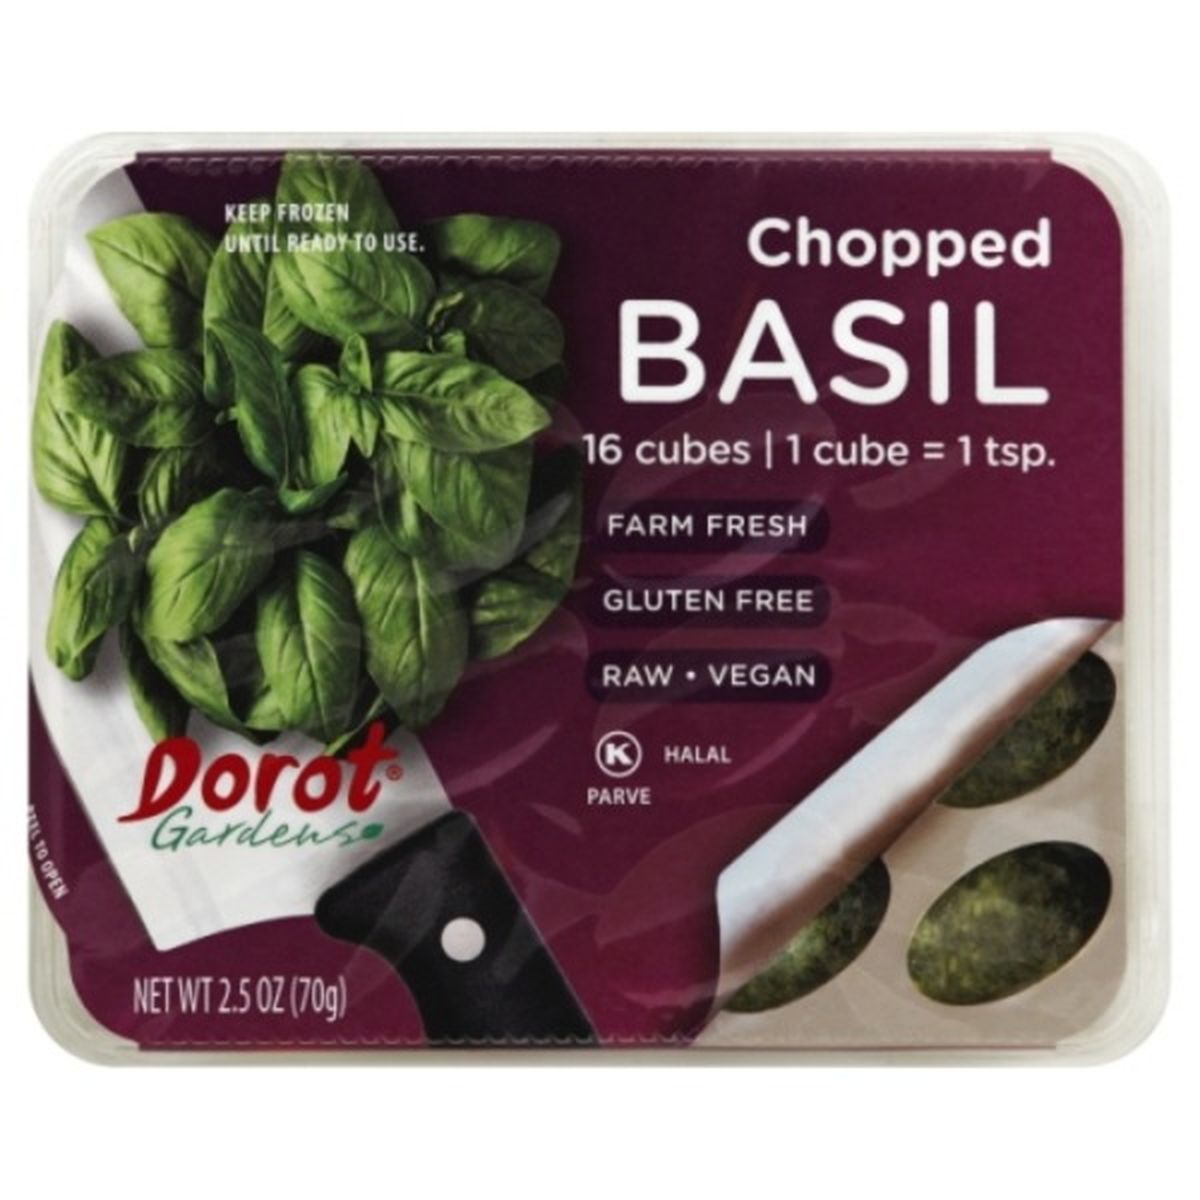 Calories in Dorot Basil, Chopped